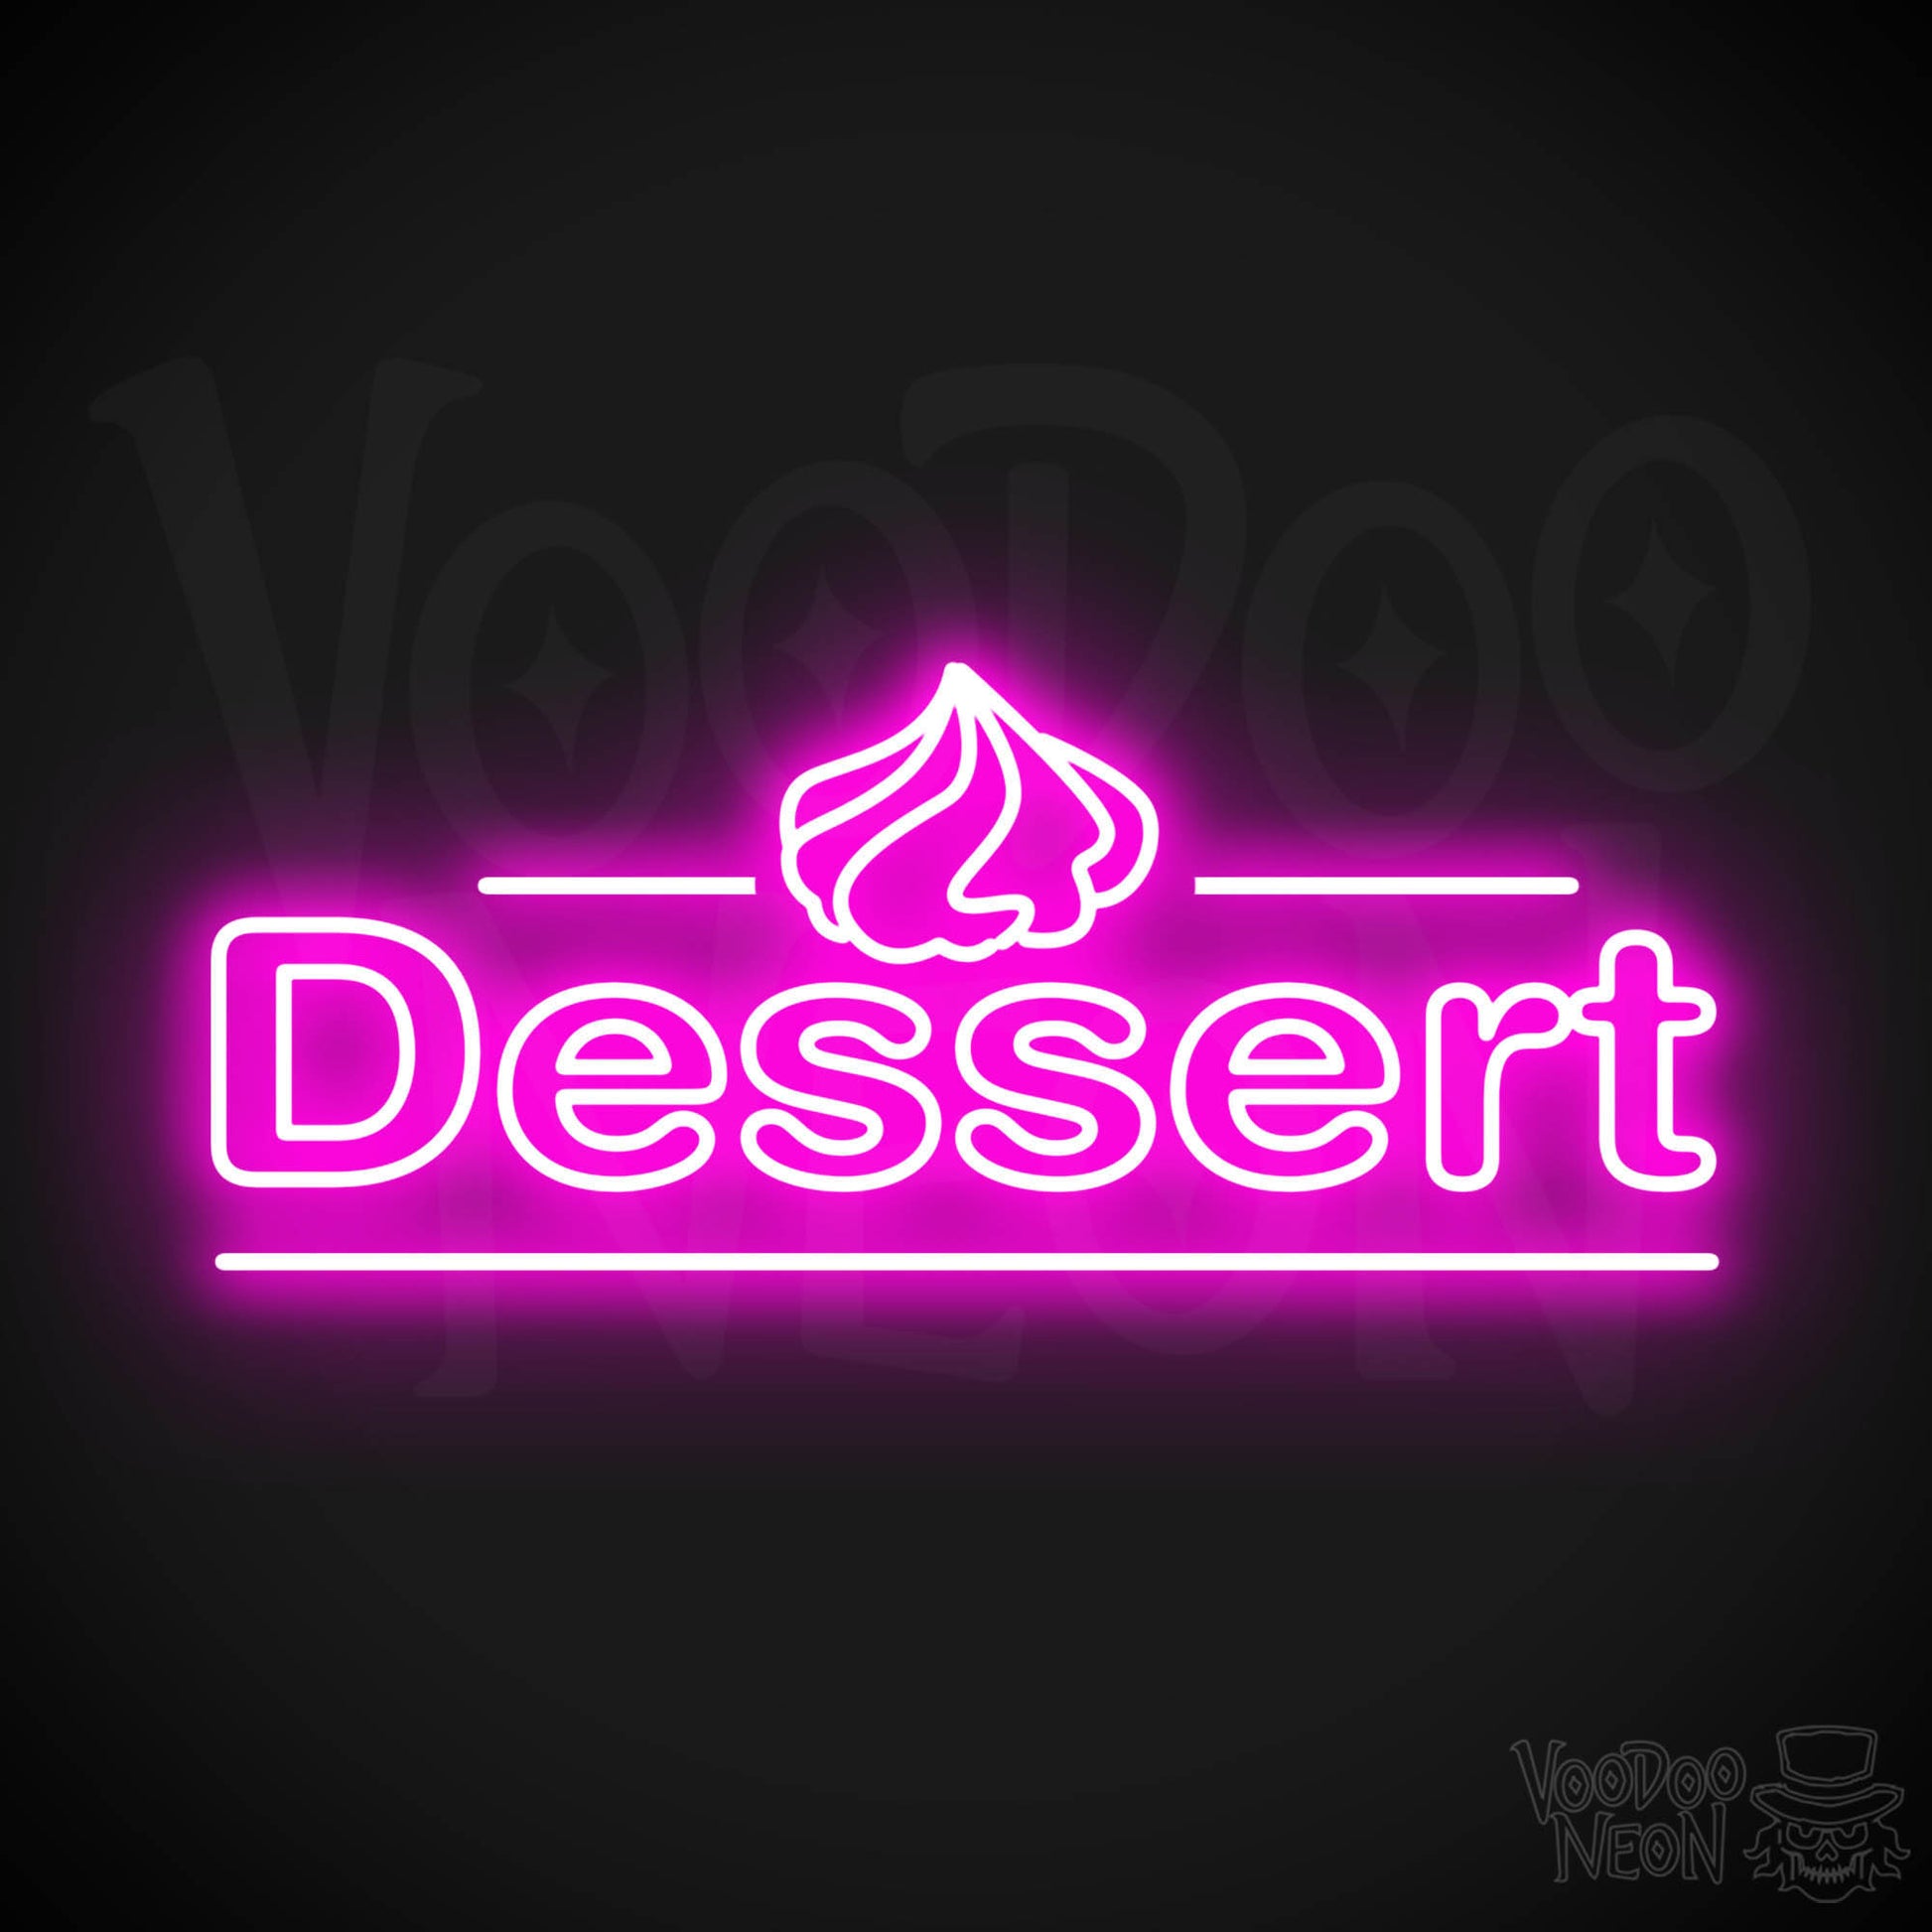 Dessert LED Neon - Pink